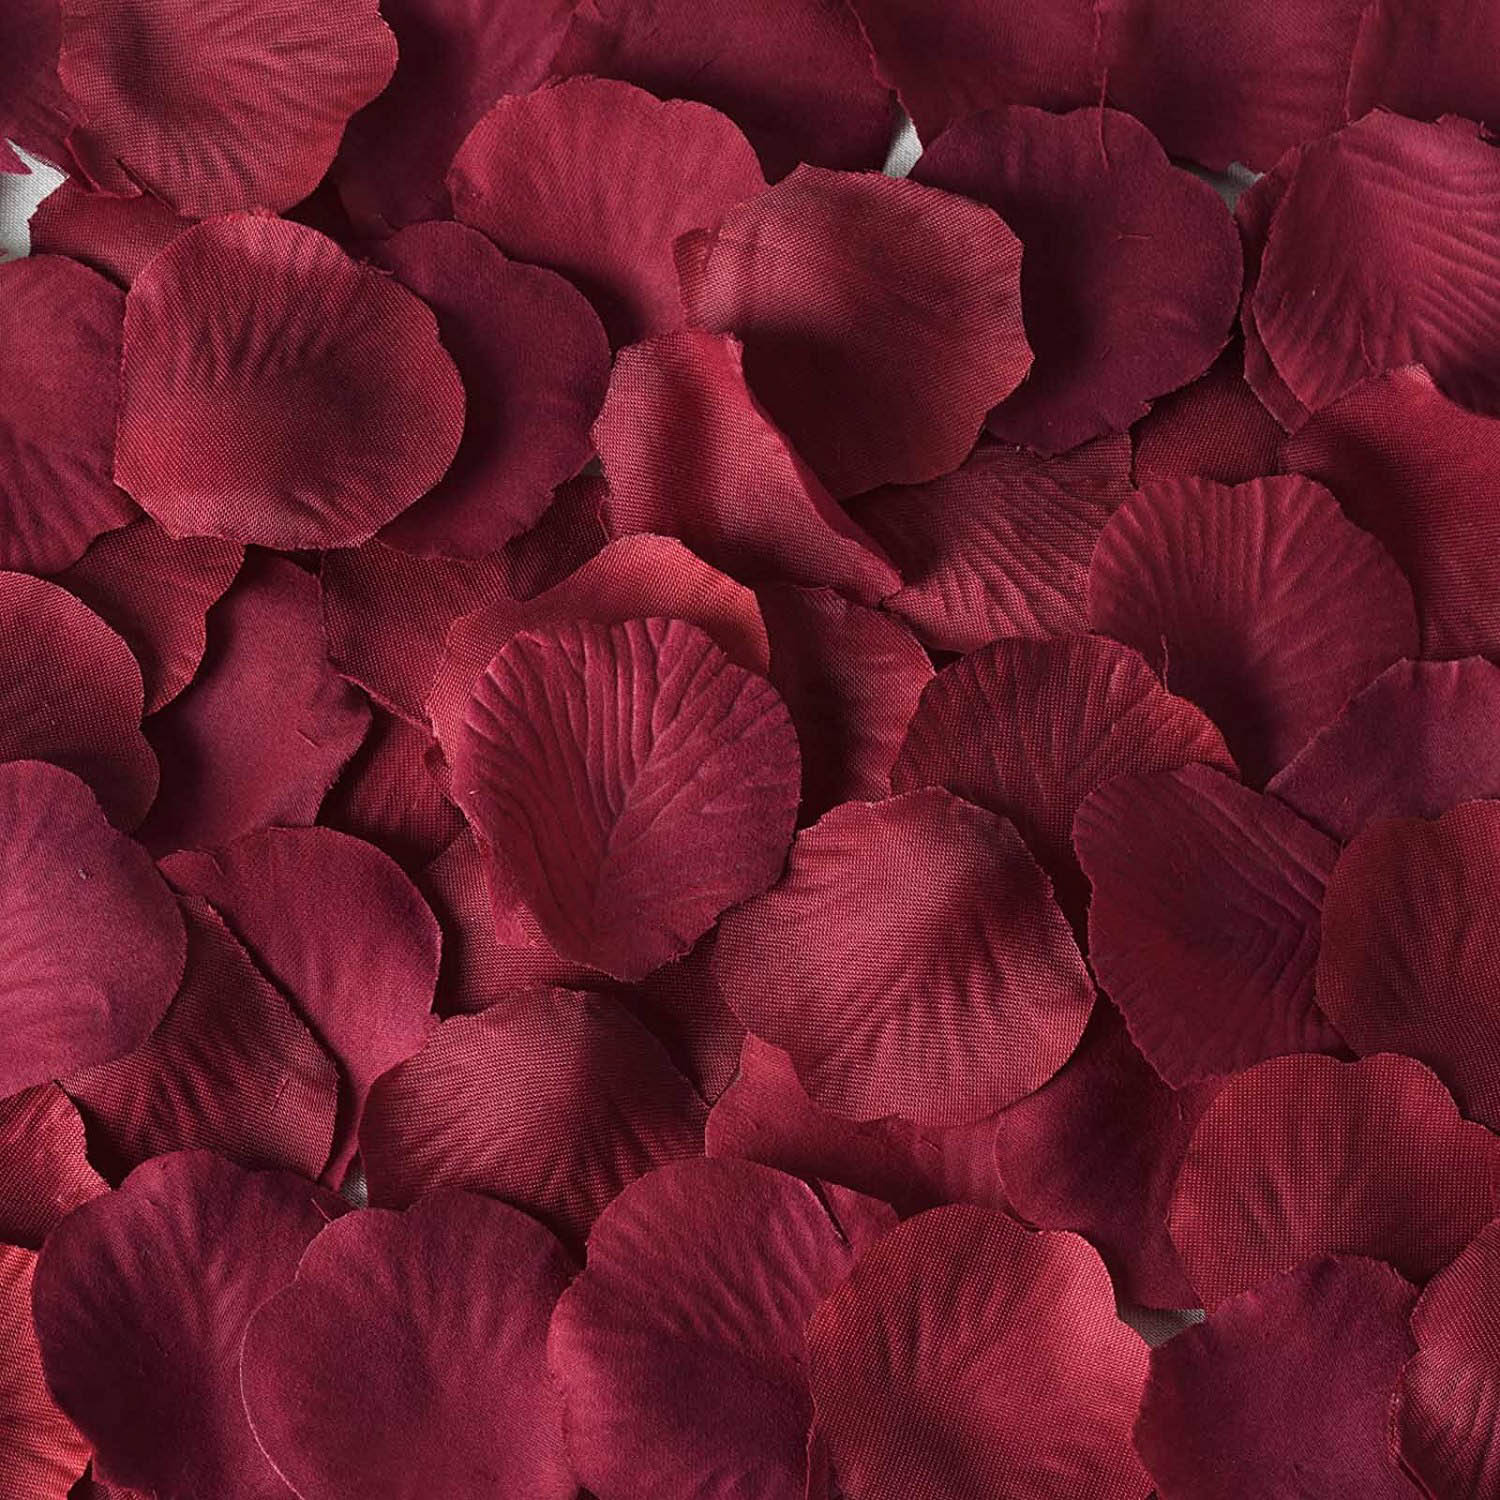 Artificial Silk Rose Petals Scented or Non Scented - Natural Bath ...